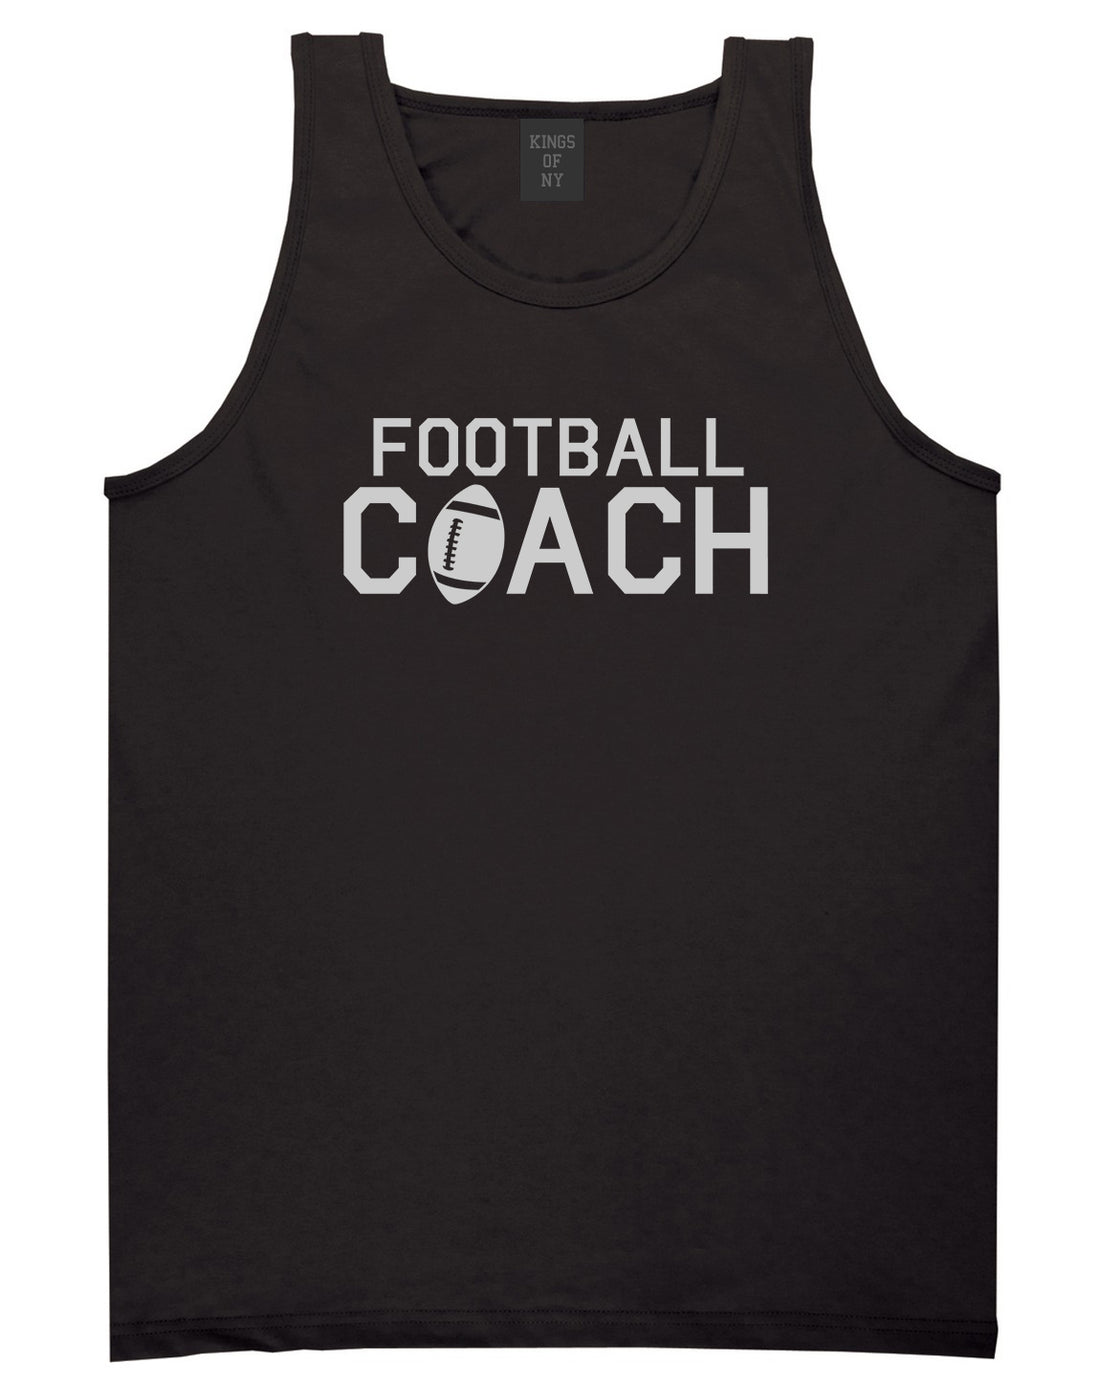 Football Coach Sports Mens Black Tank Top Shirt by KINGS OF NY